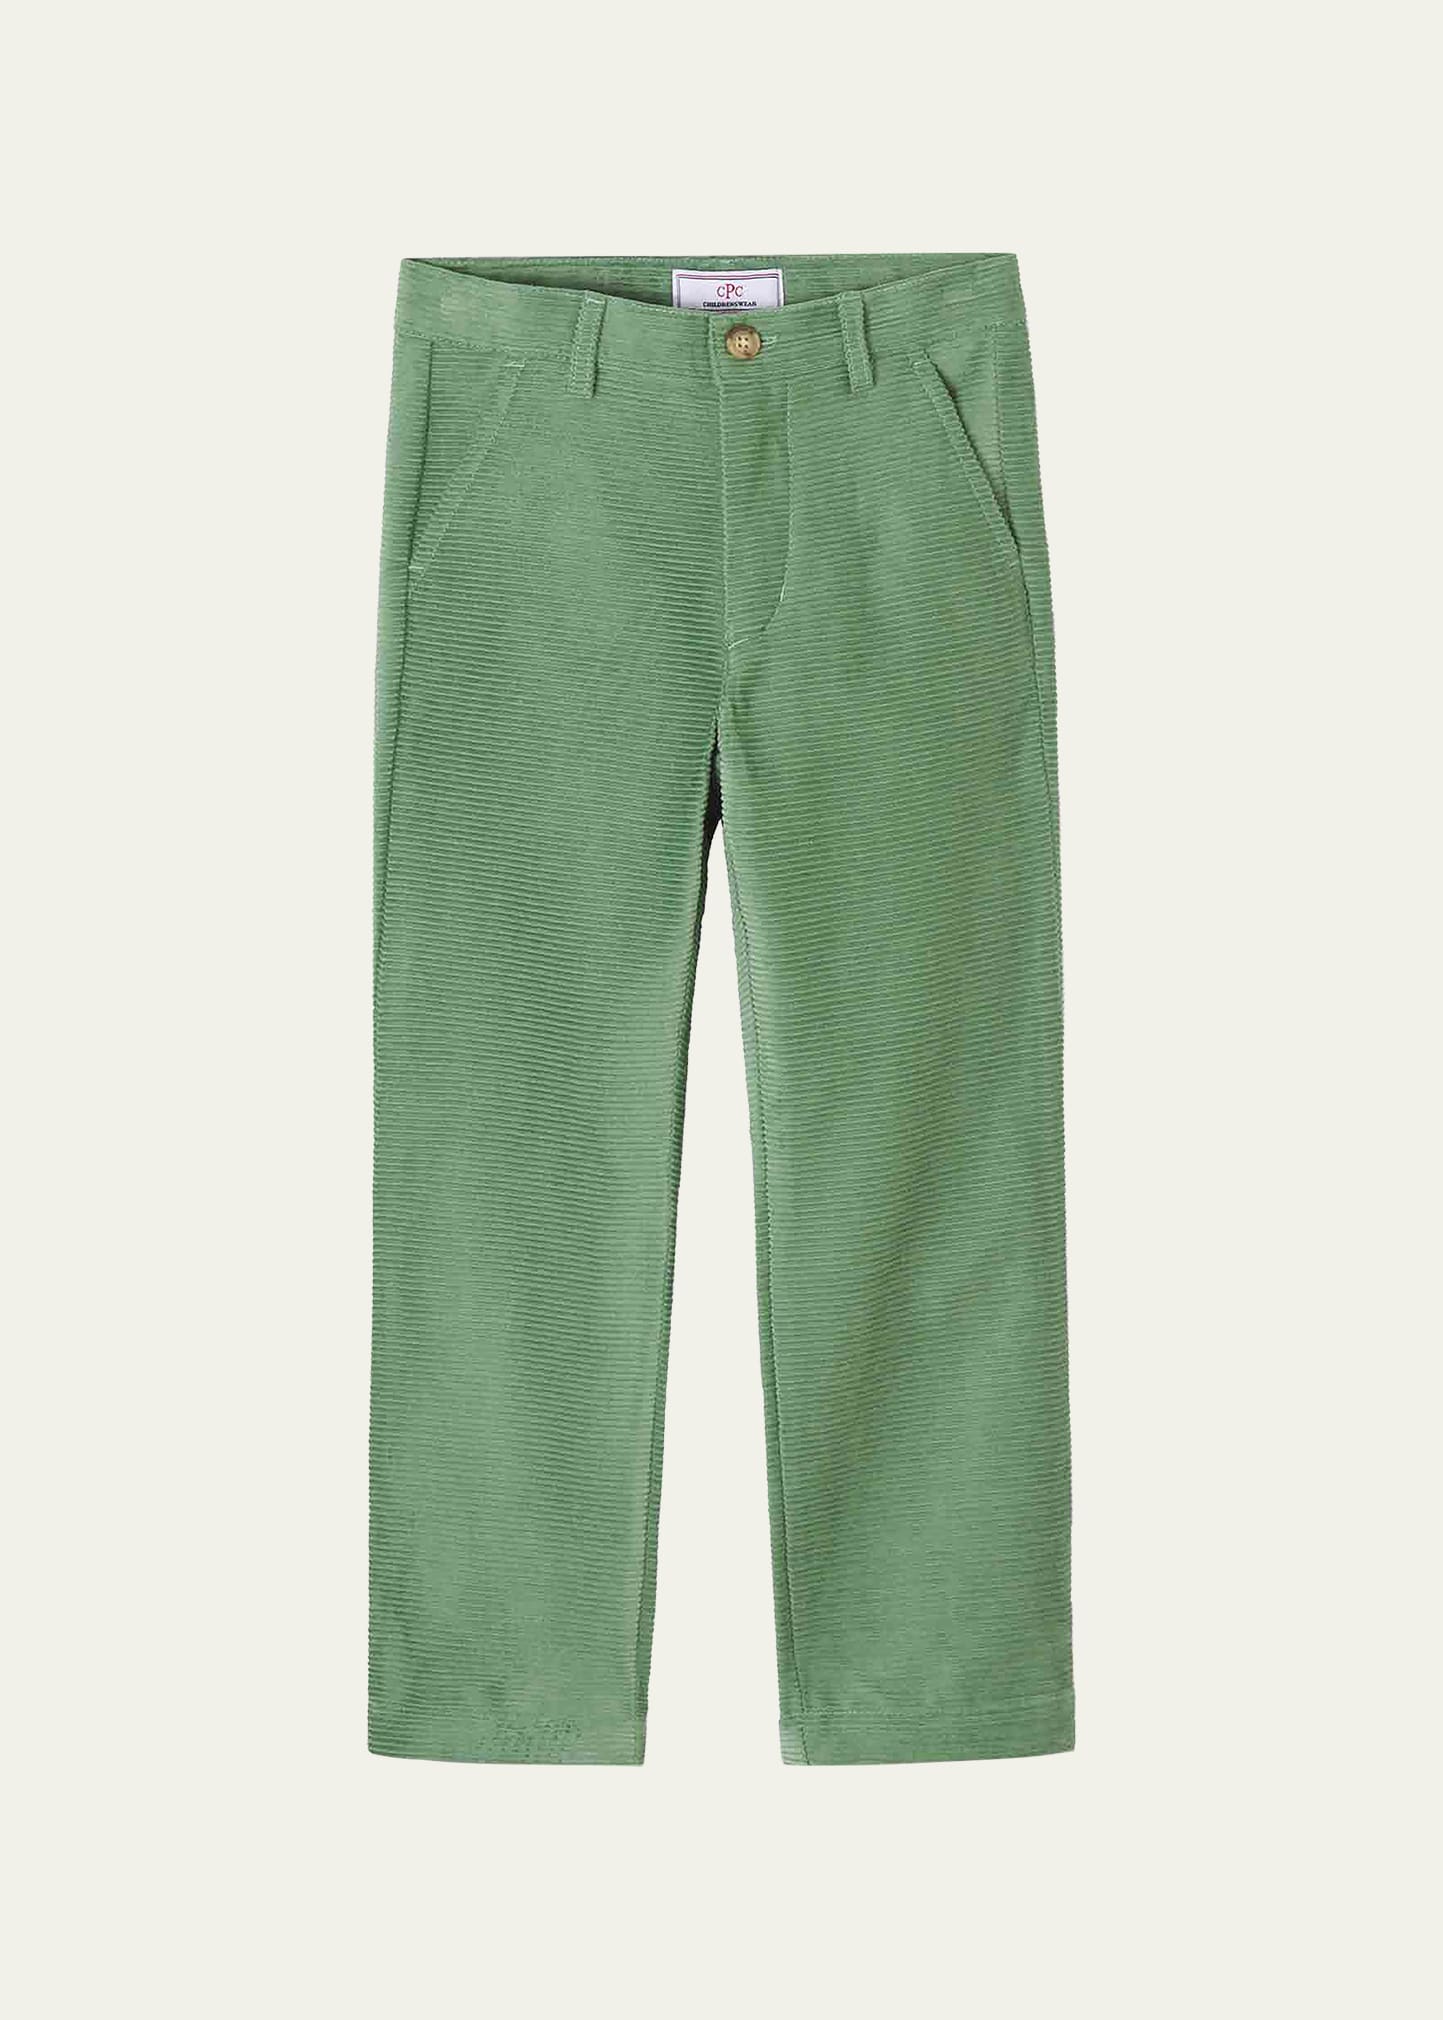 Classic Prep Childrenswear Boy's Gavin Corduroy Pants, Size 5-14